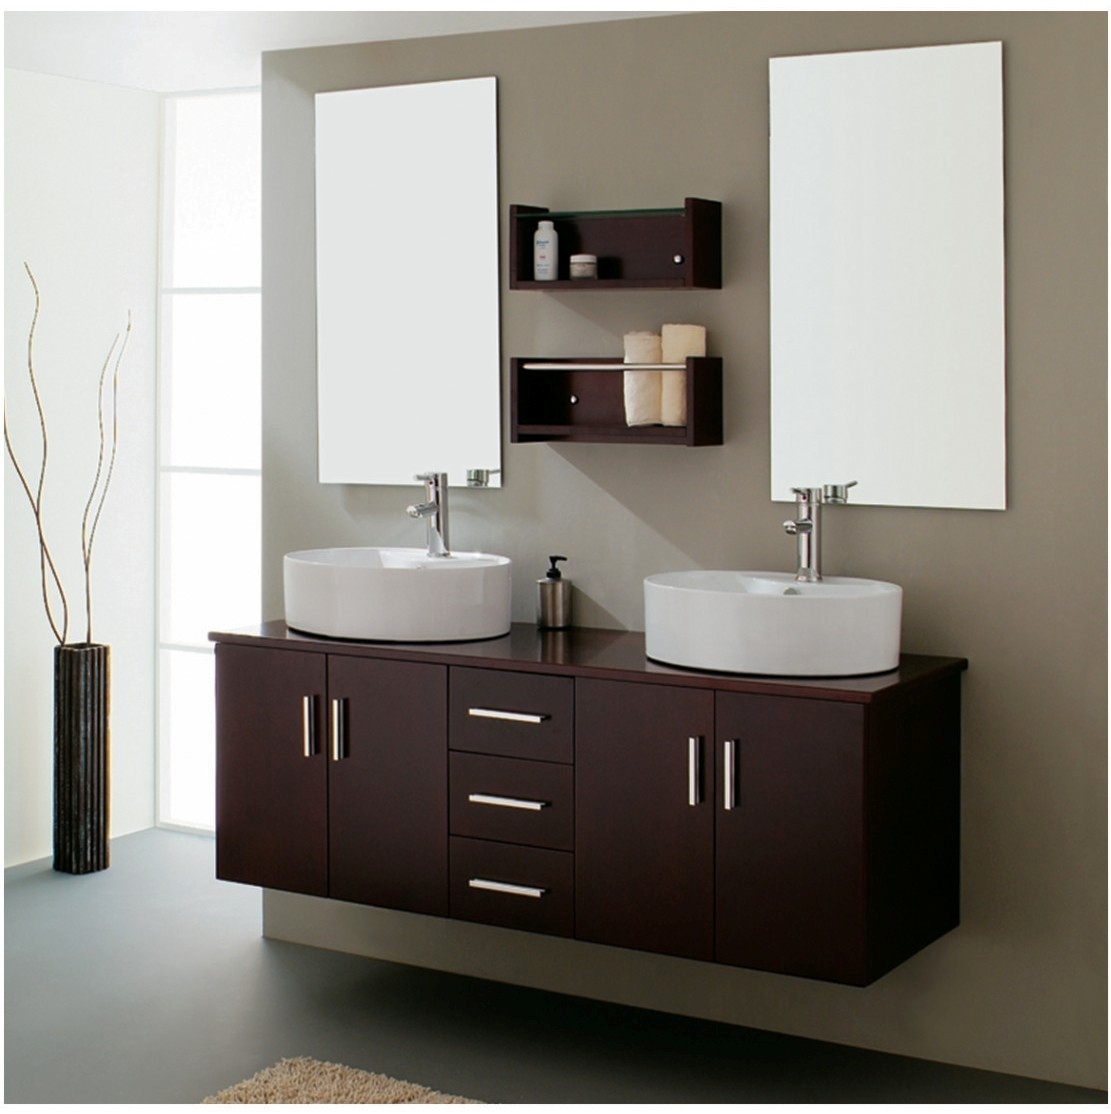 Wonderful Modern Bathroom Cabinets1 Inspiration